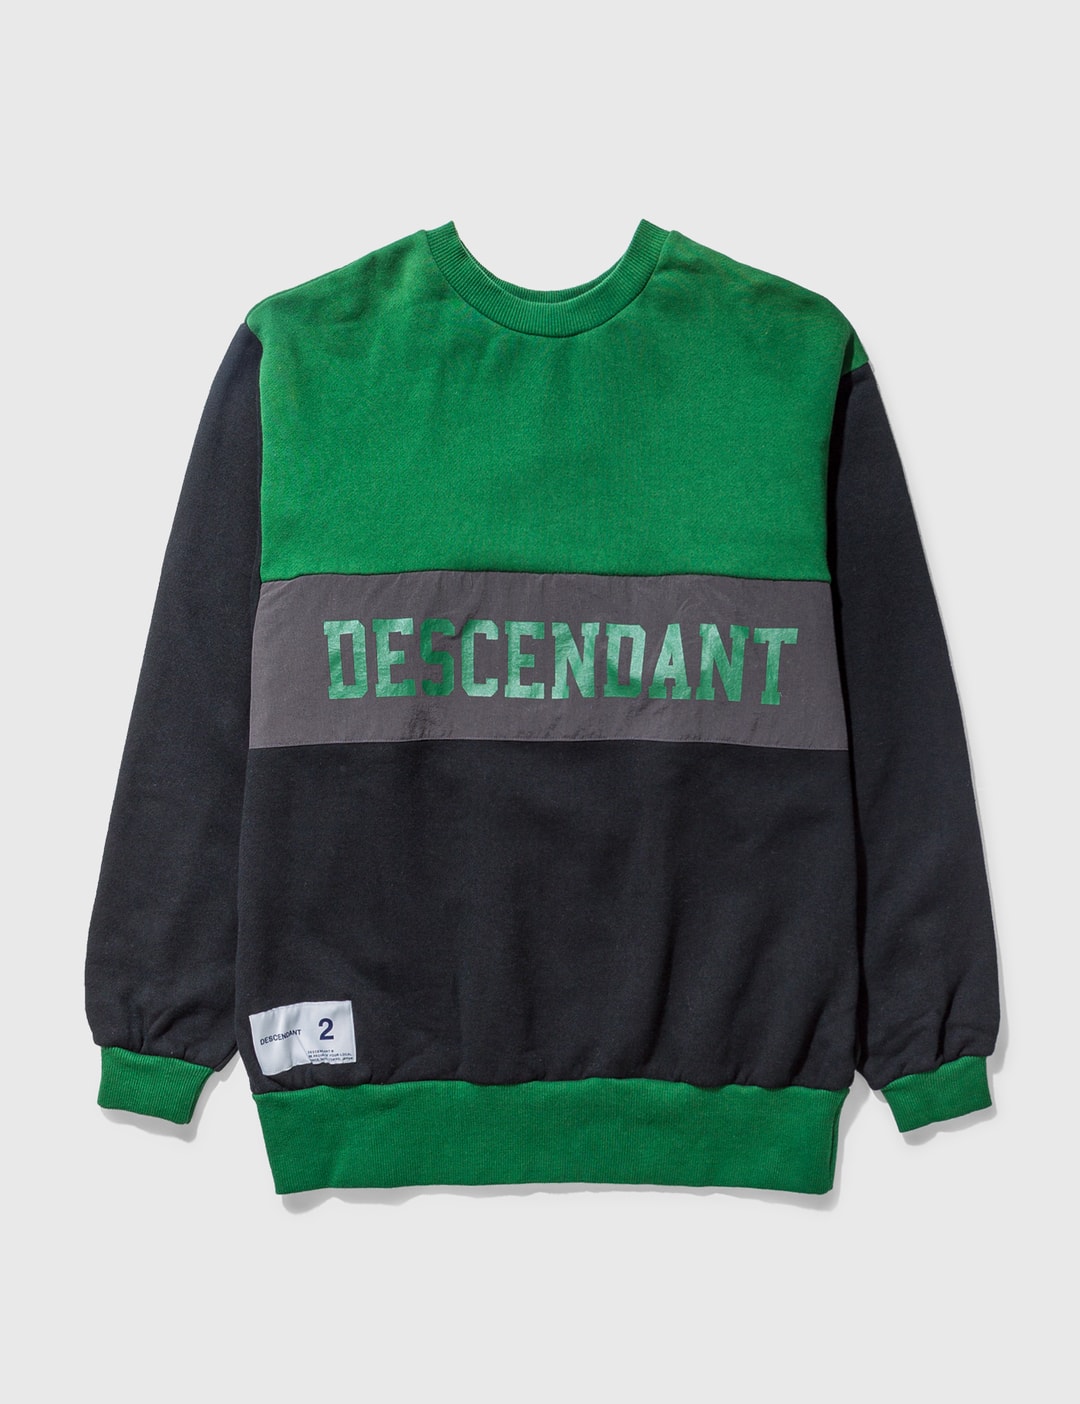 DESCENDANT Black and Green Sweatshirt Placeholder Image